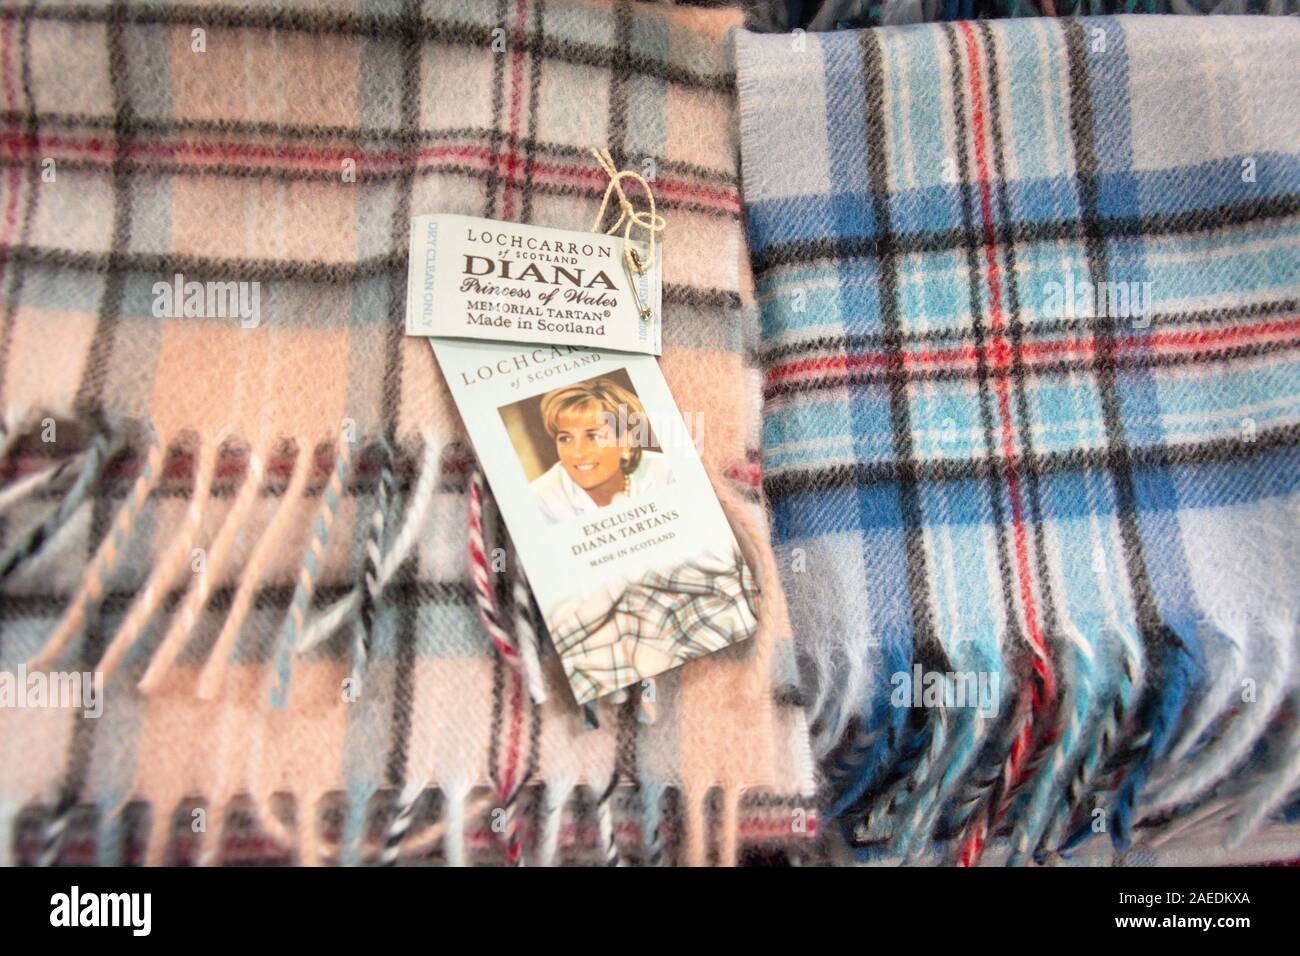 Diana Princess of Wales Memorial tartan, Gretna Green célèbre boutique, forgerons, Gretna Gretna Green, Dumfries et Galloway, Écosse, Royaume-Uni Banque D'Images